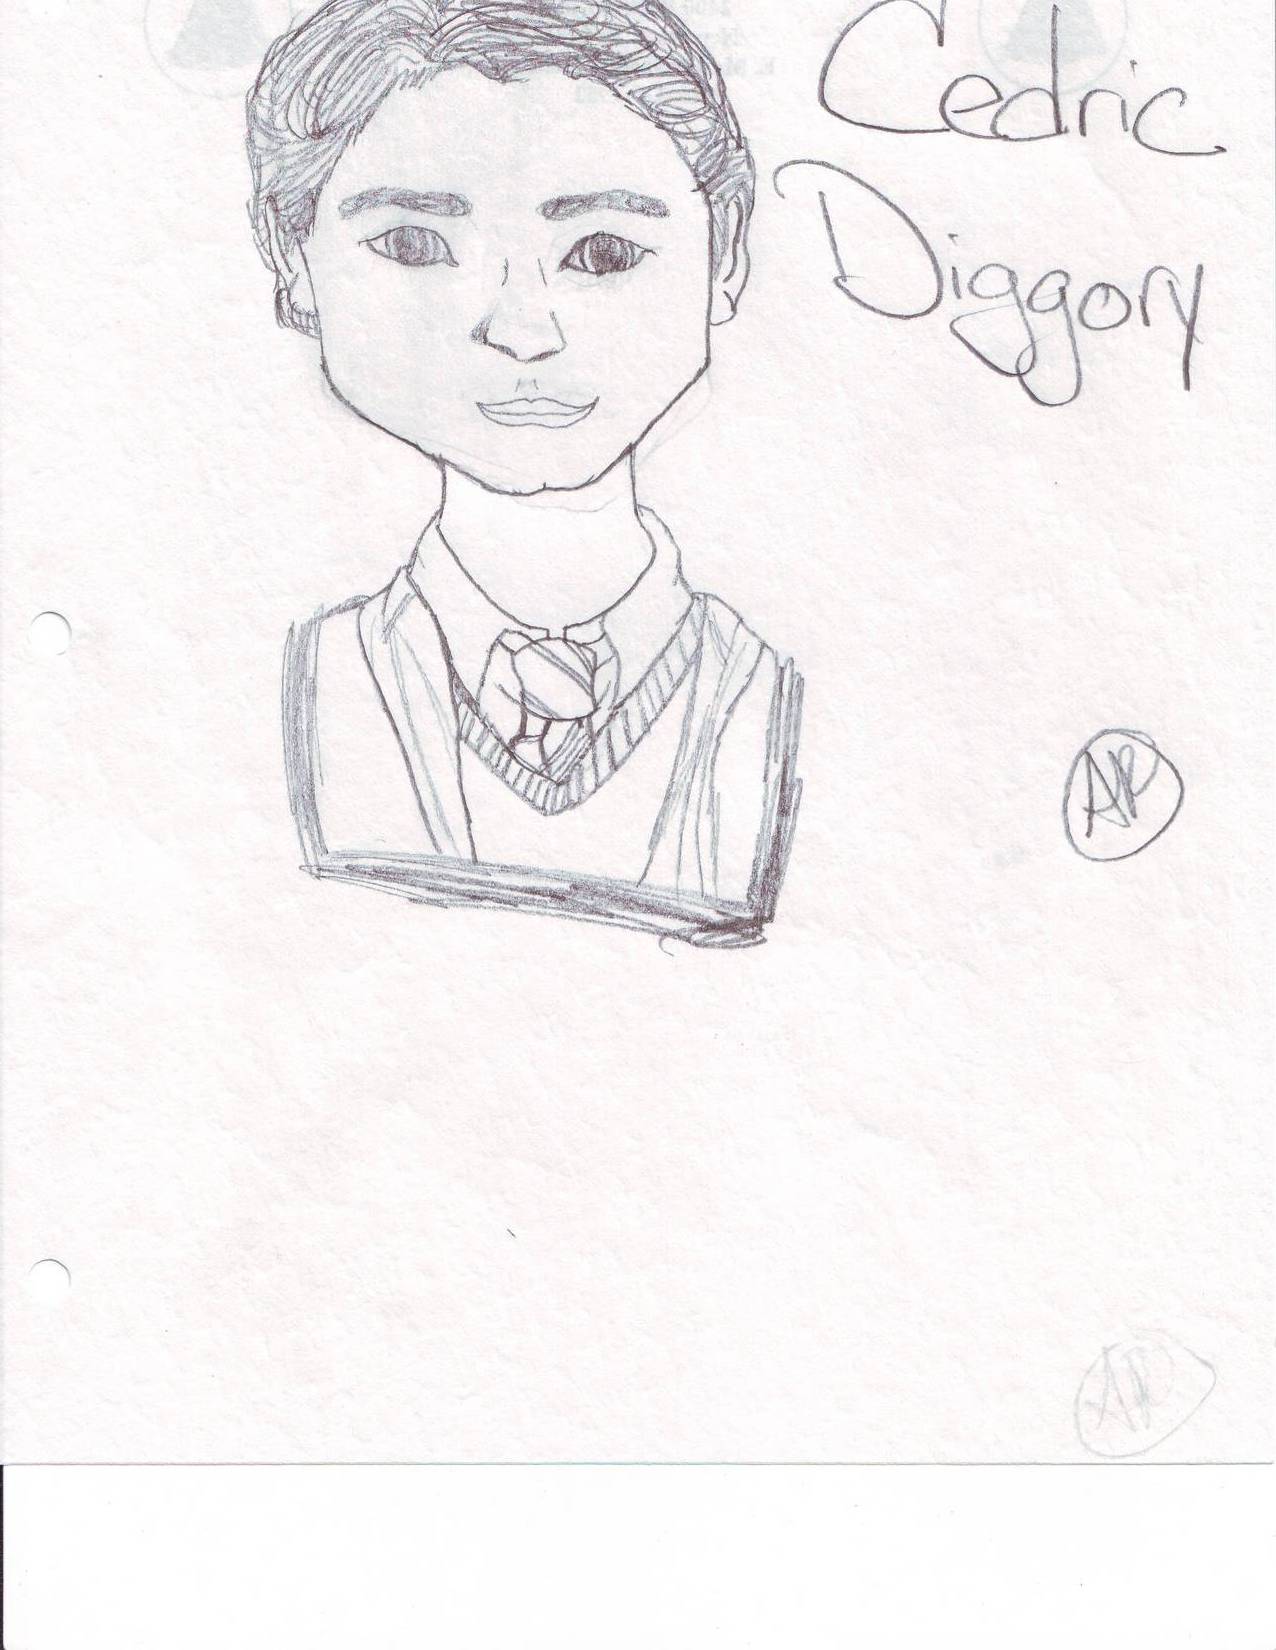 Cedric Diggory by Ferret_Avatar22